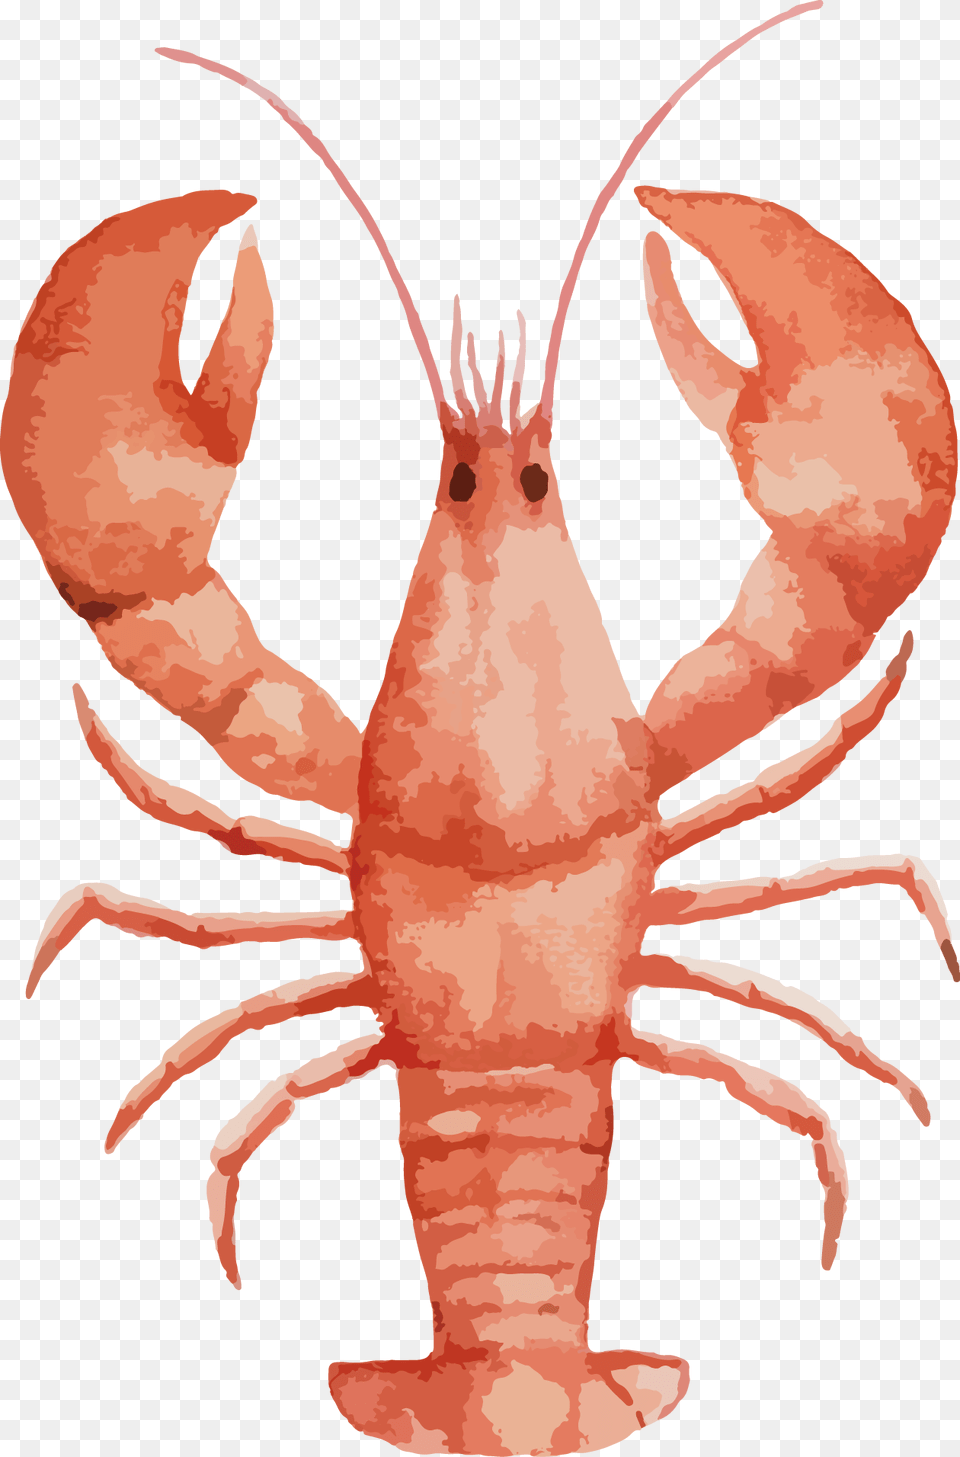 Painting Seafood Drawing Painted Lobster Watercolor, Food, Animal, Sea Life, Crawdad Png Image